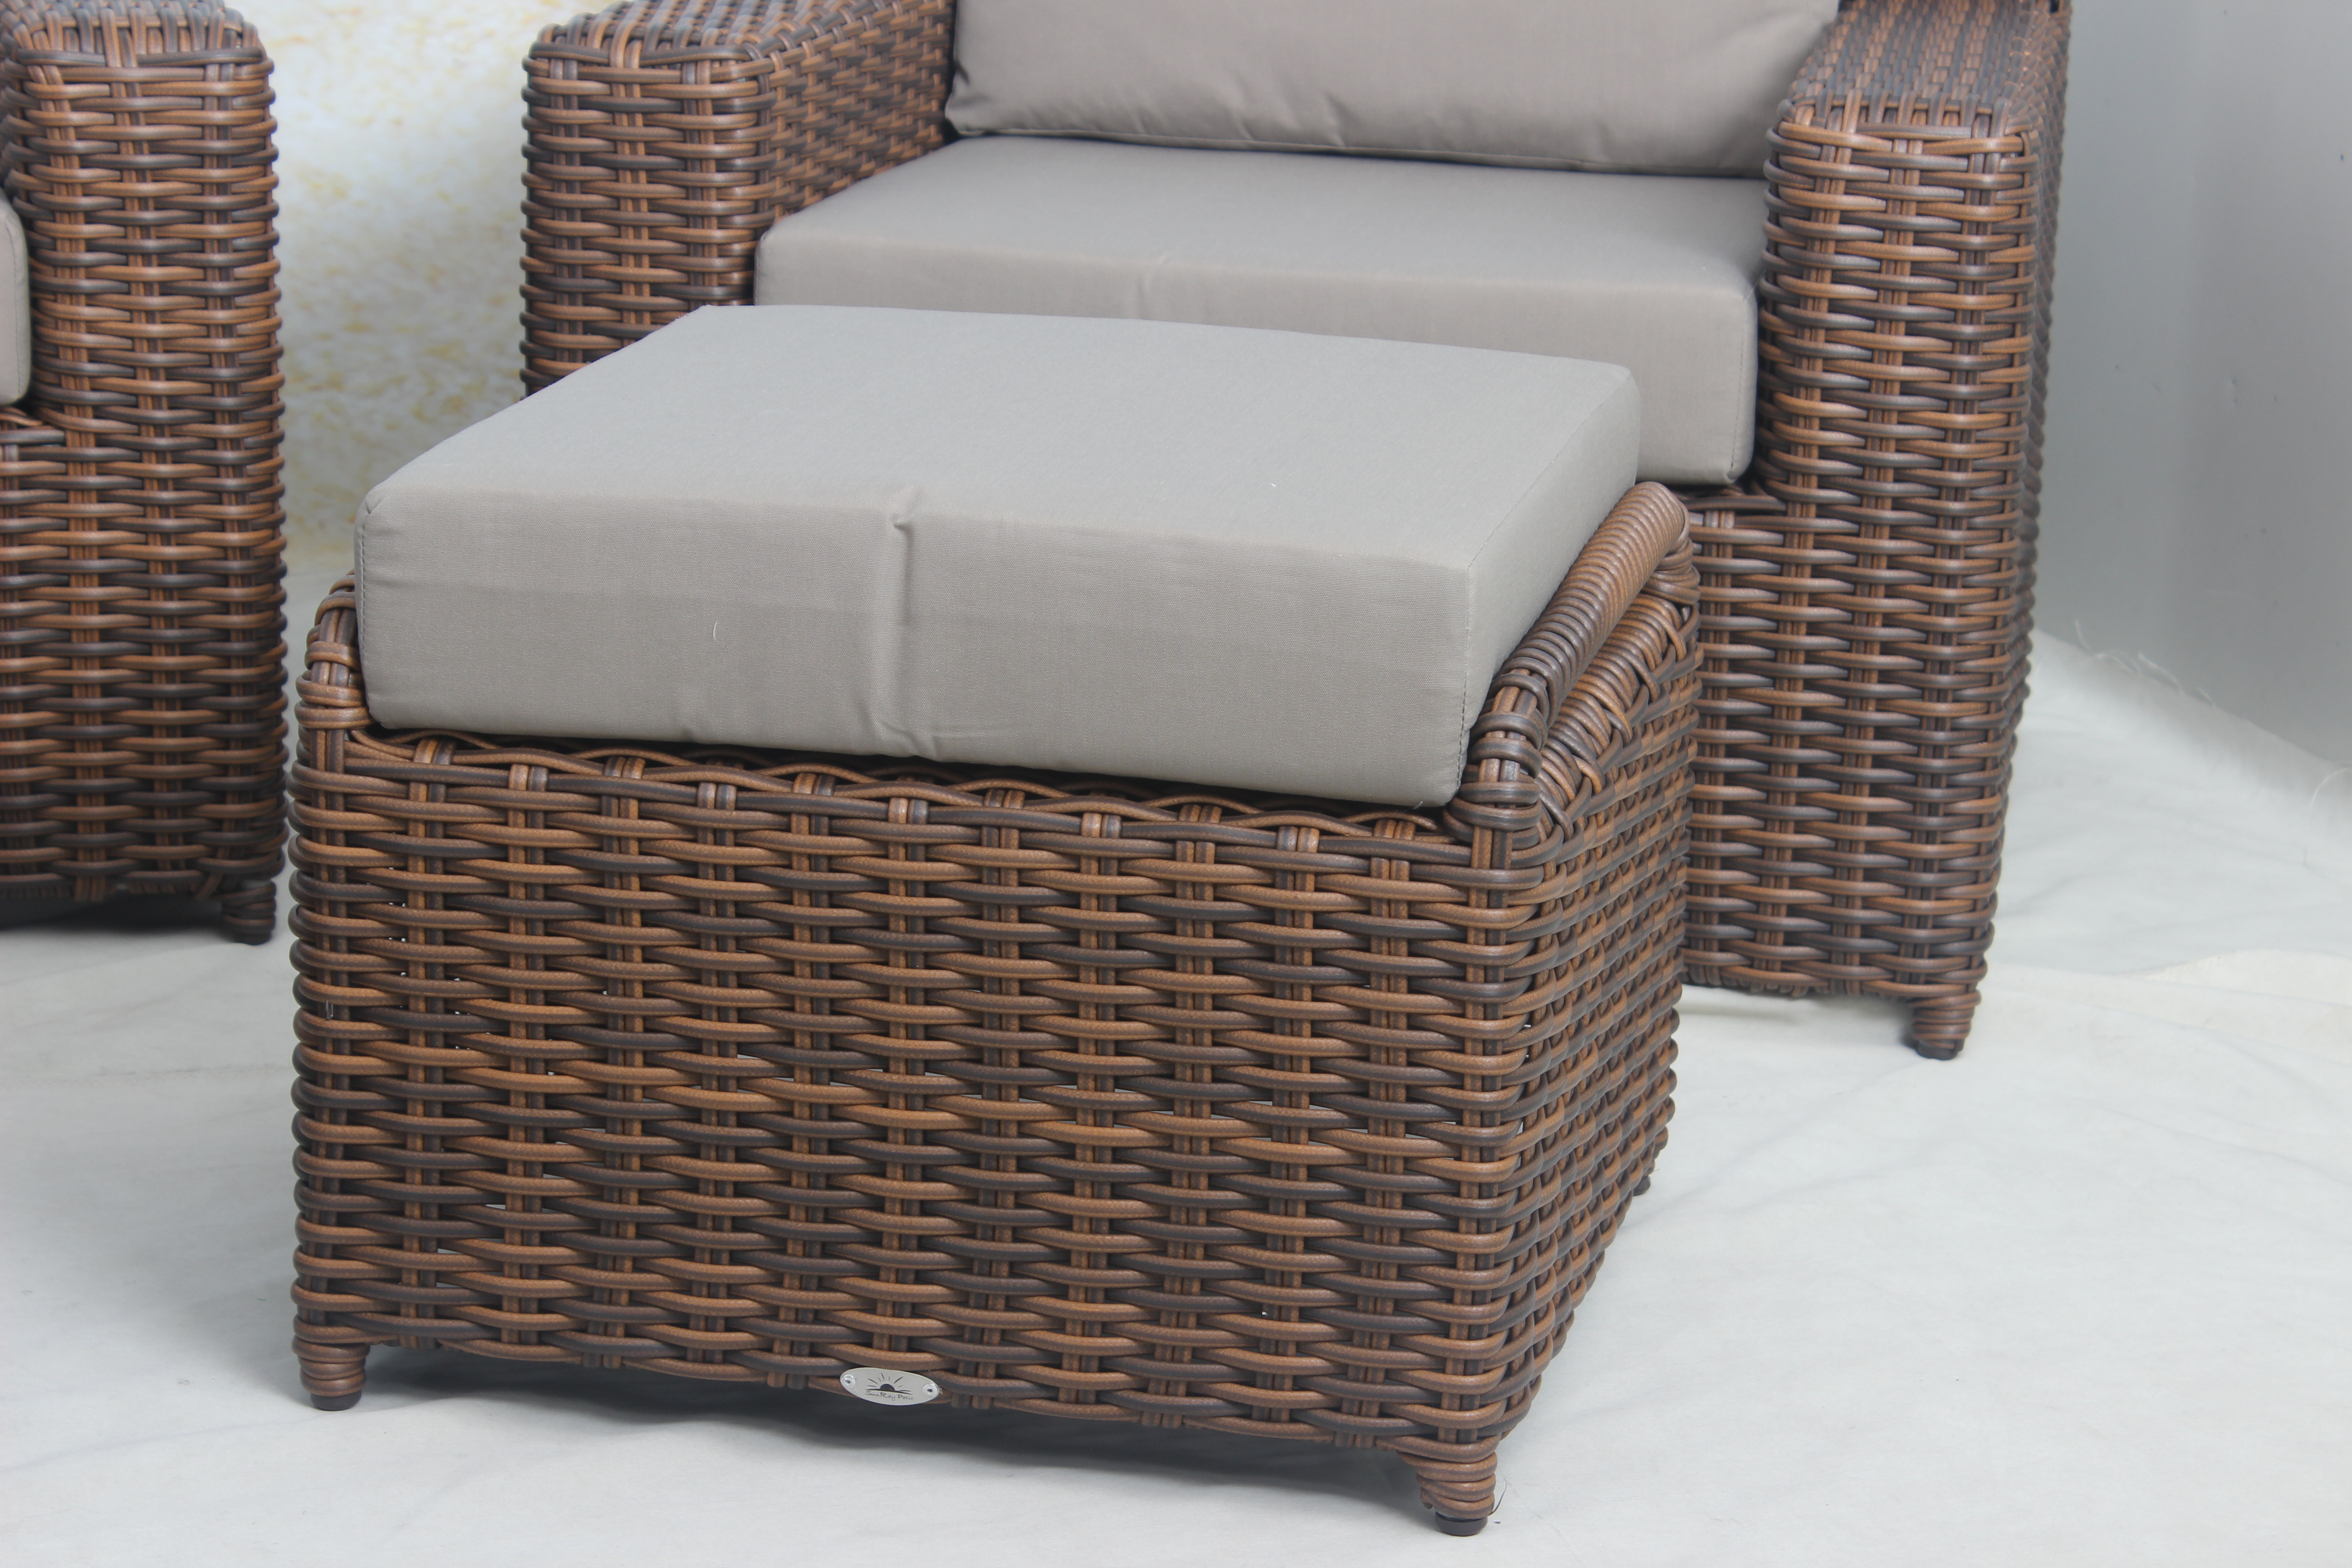 Wicker woven brown modern outdoor sofa set